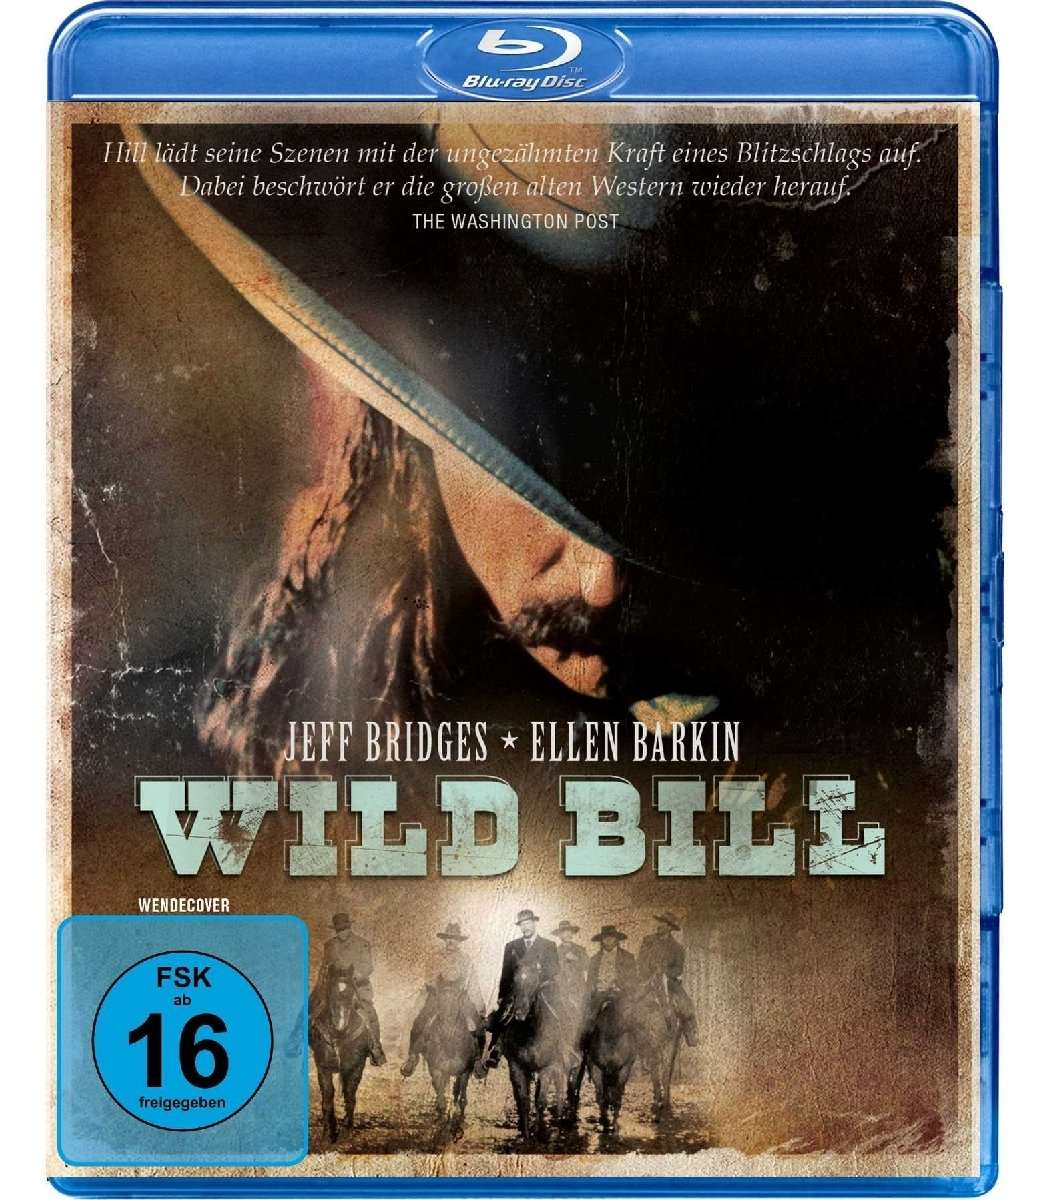 Wild Bill (1995) FullHD BDRip 1080p Ac3 ITA (DVD Resync) DTS-HD MA Ac3 ENG Subs - Krikk